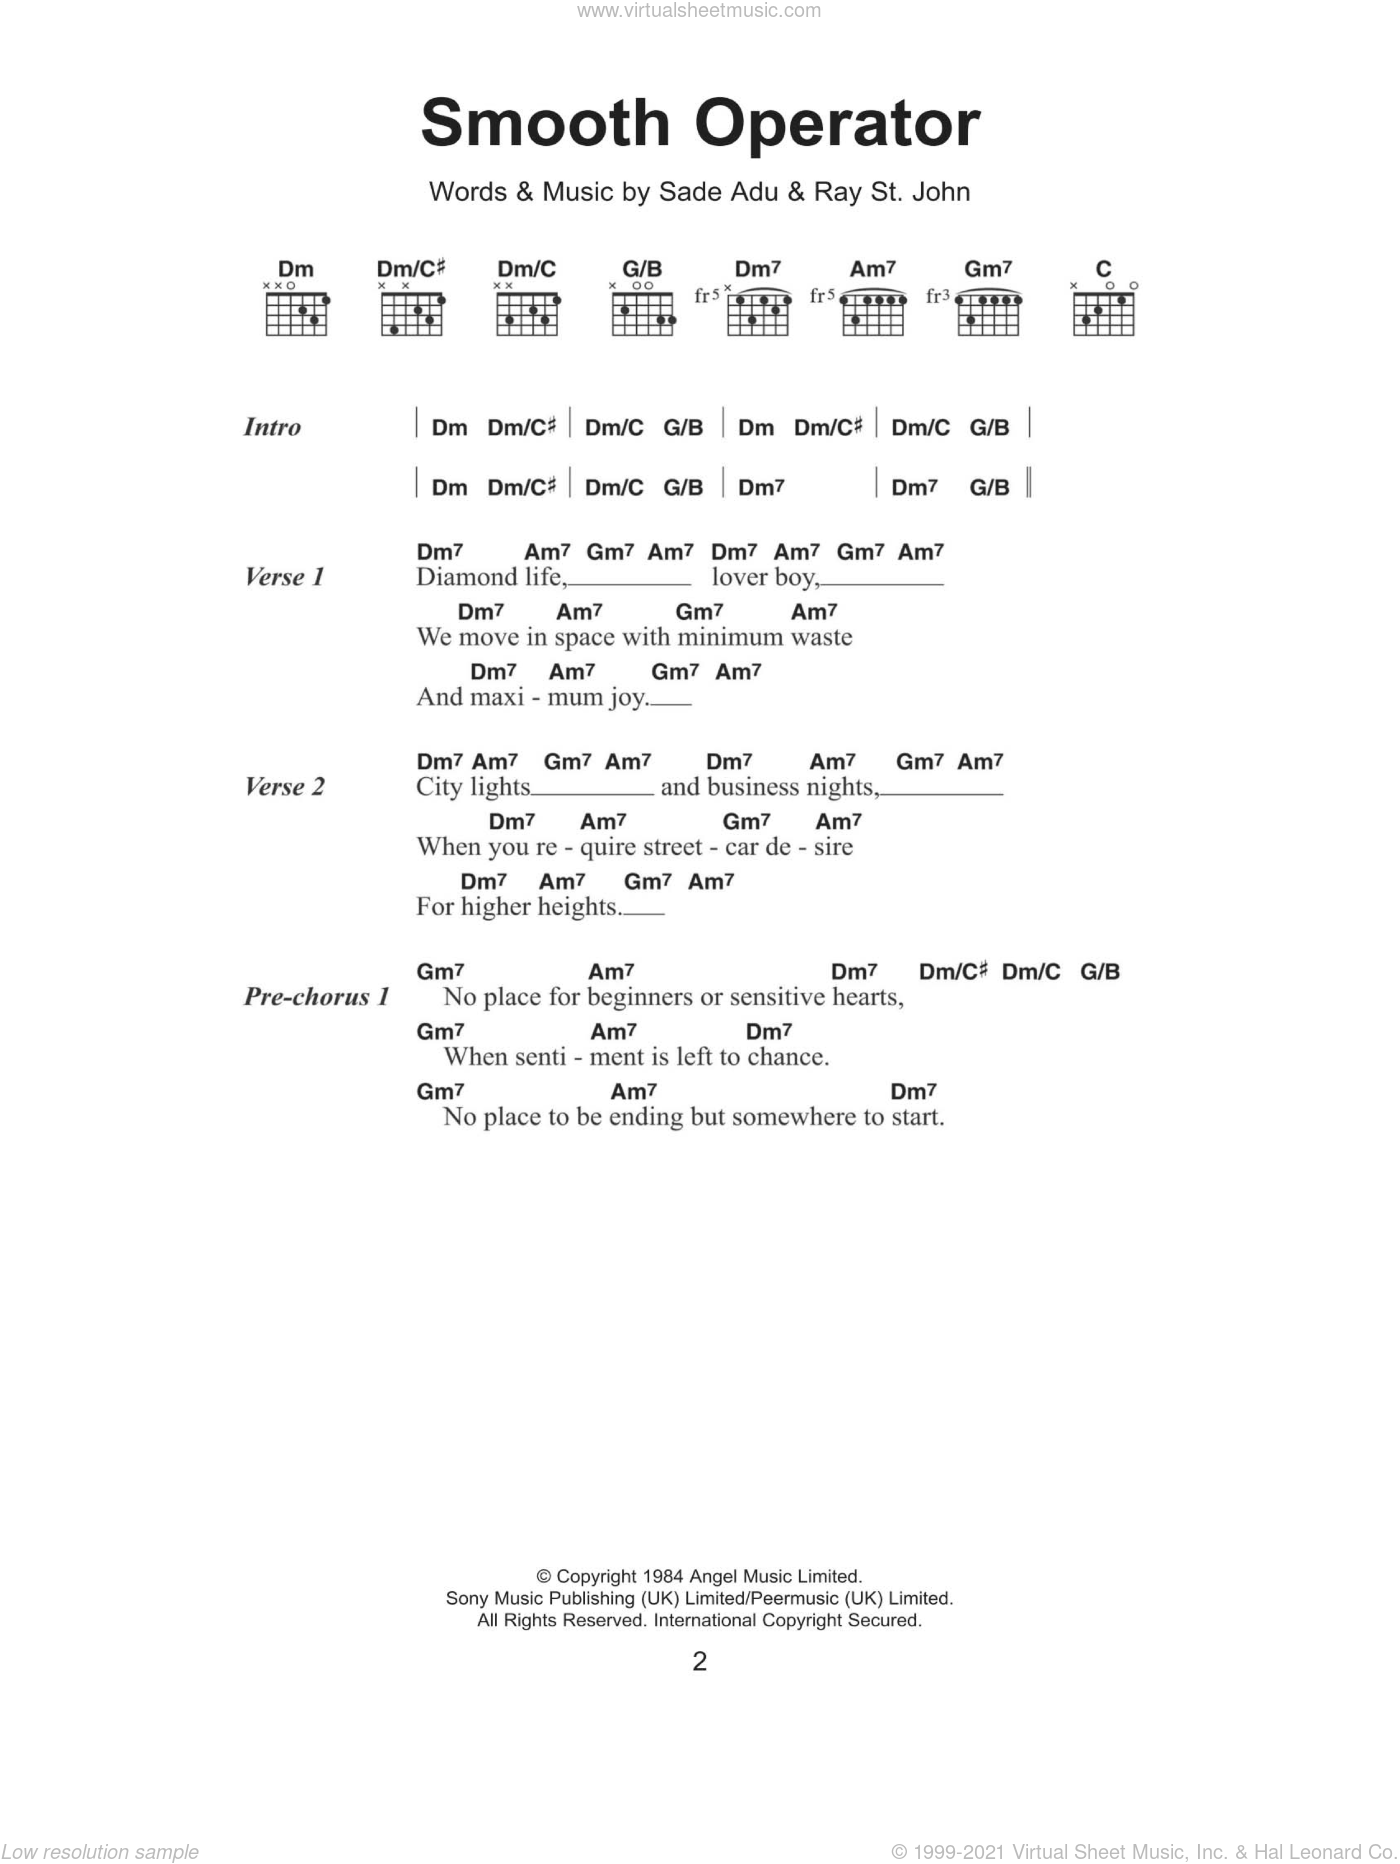 Smooth Operator sheet music for guitar (chords) (PDF) v2